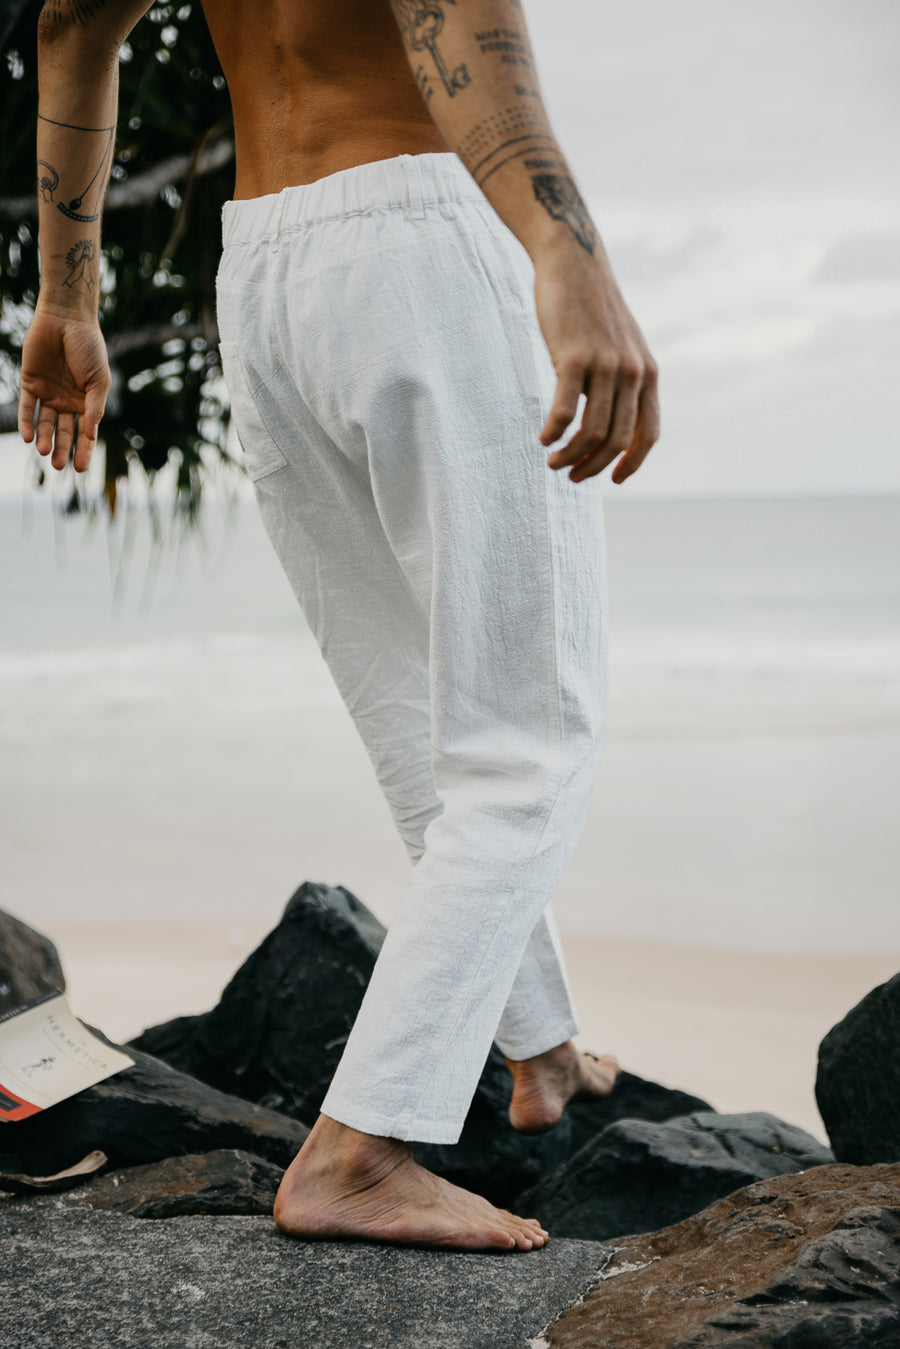 Miller - Textured Linen Pants - White